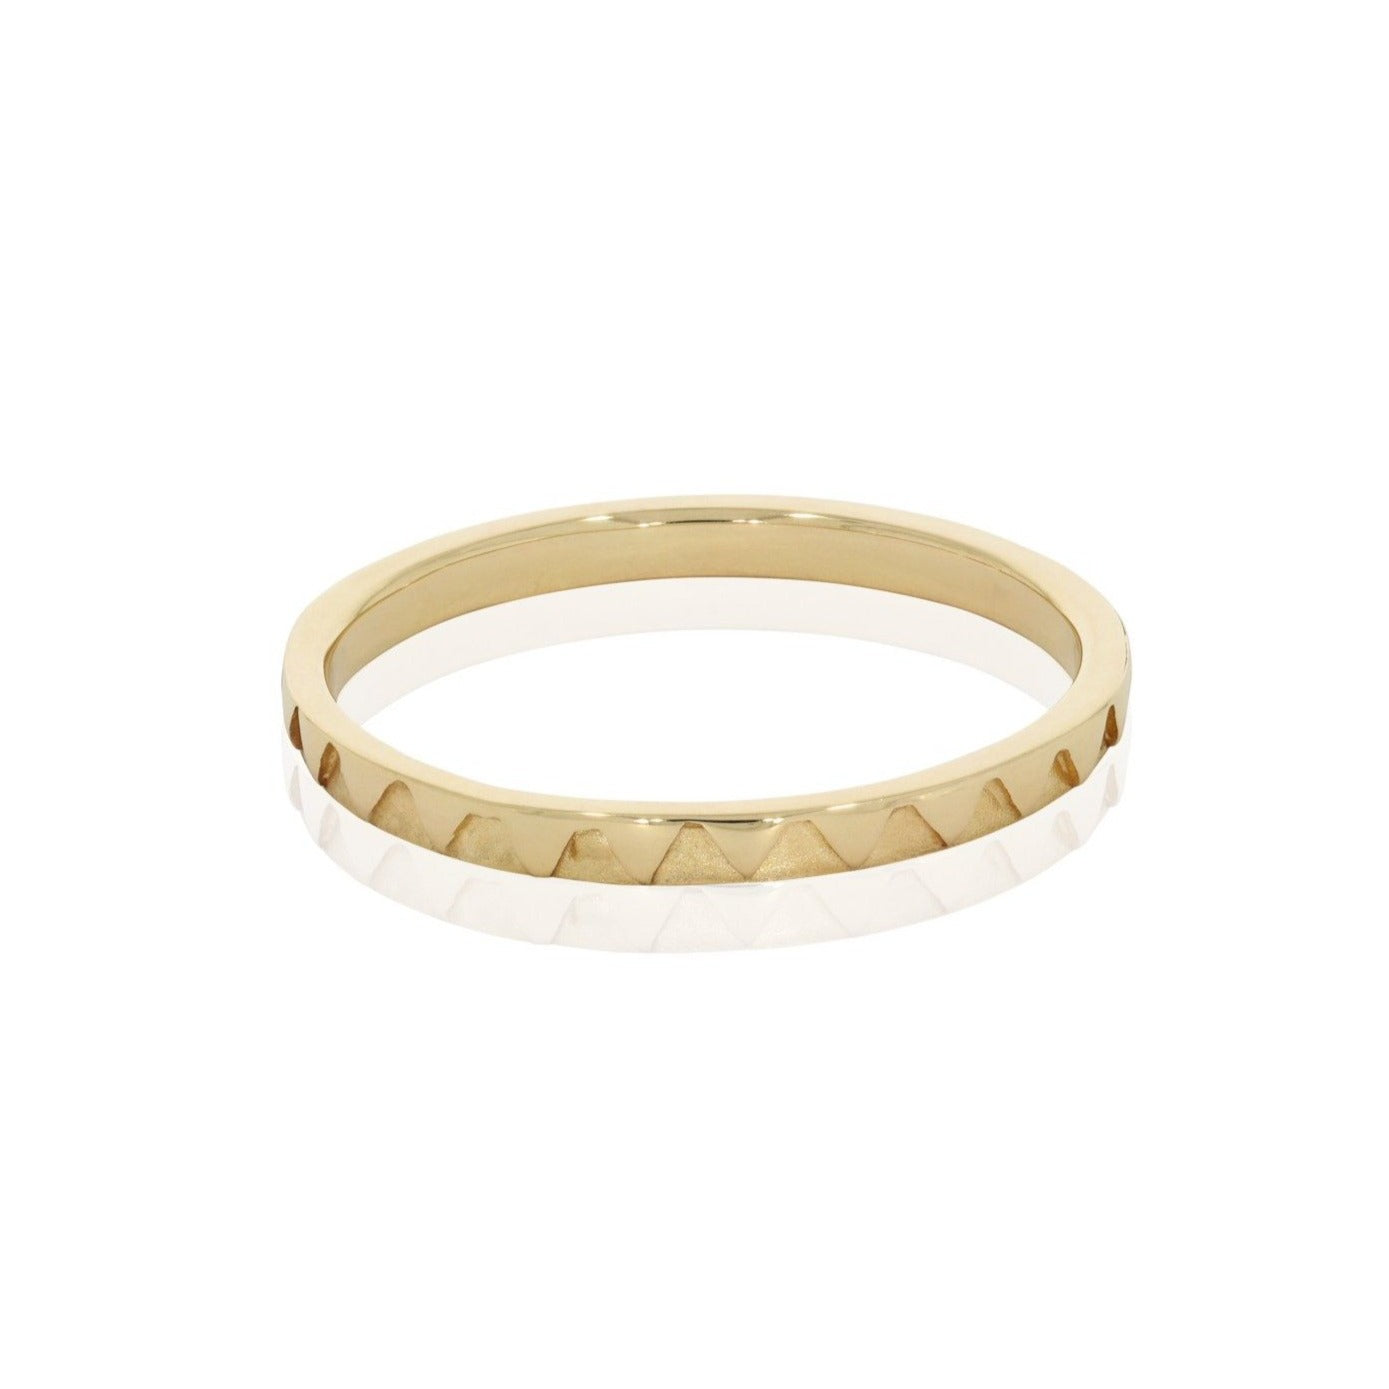 ATLAS Gold Patterned Ring